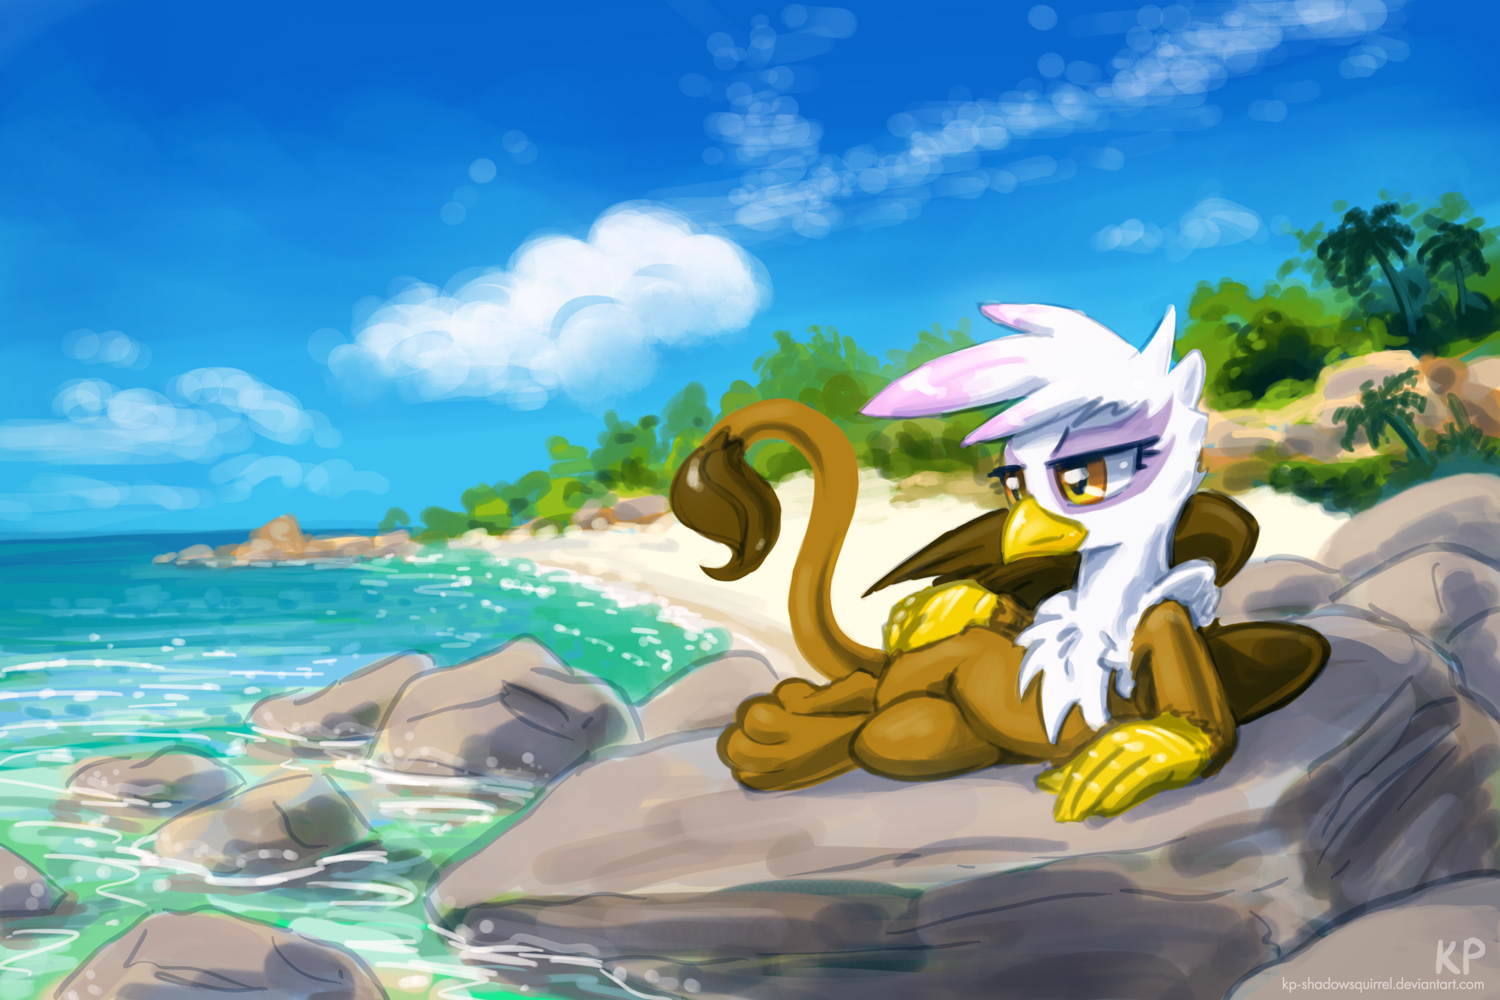 Gilda at the beach